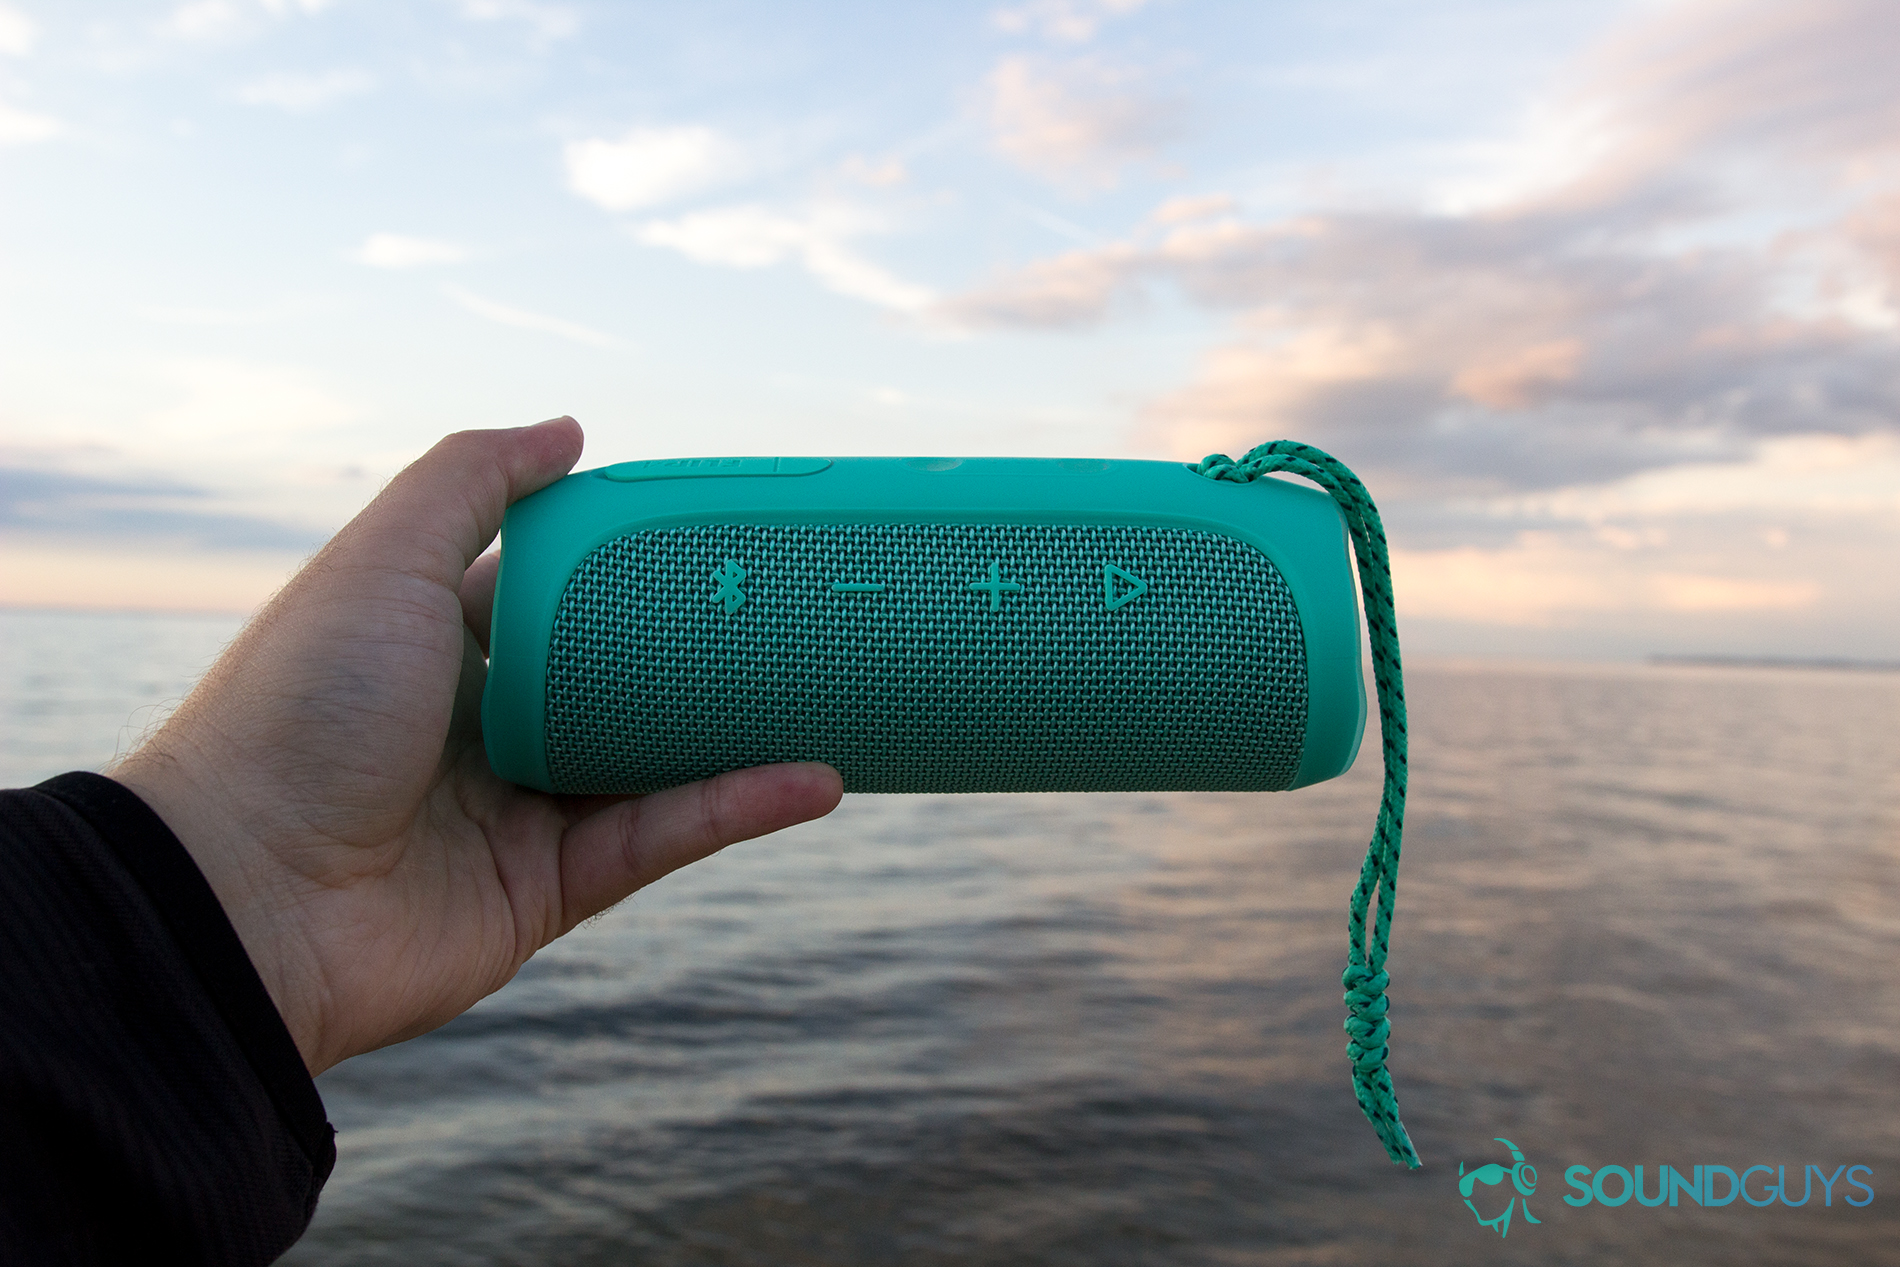 JBL Flip 4 Bluetooth speaker gets improved sound, full waterproofing - CNET